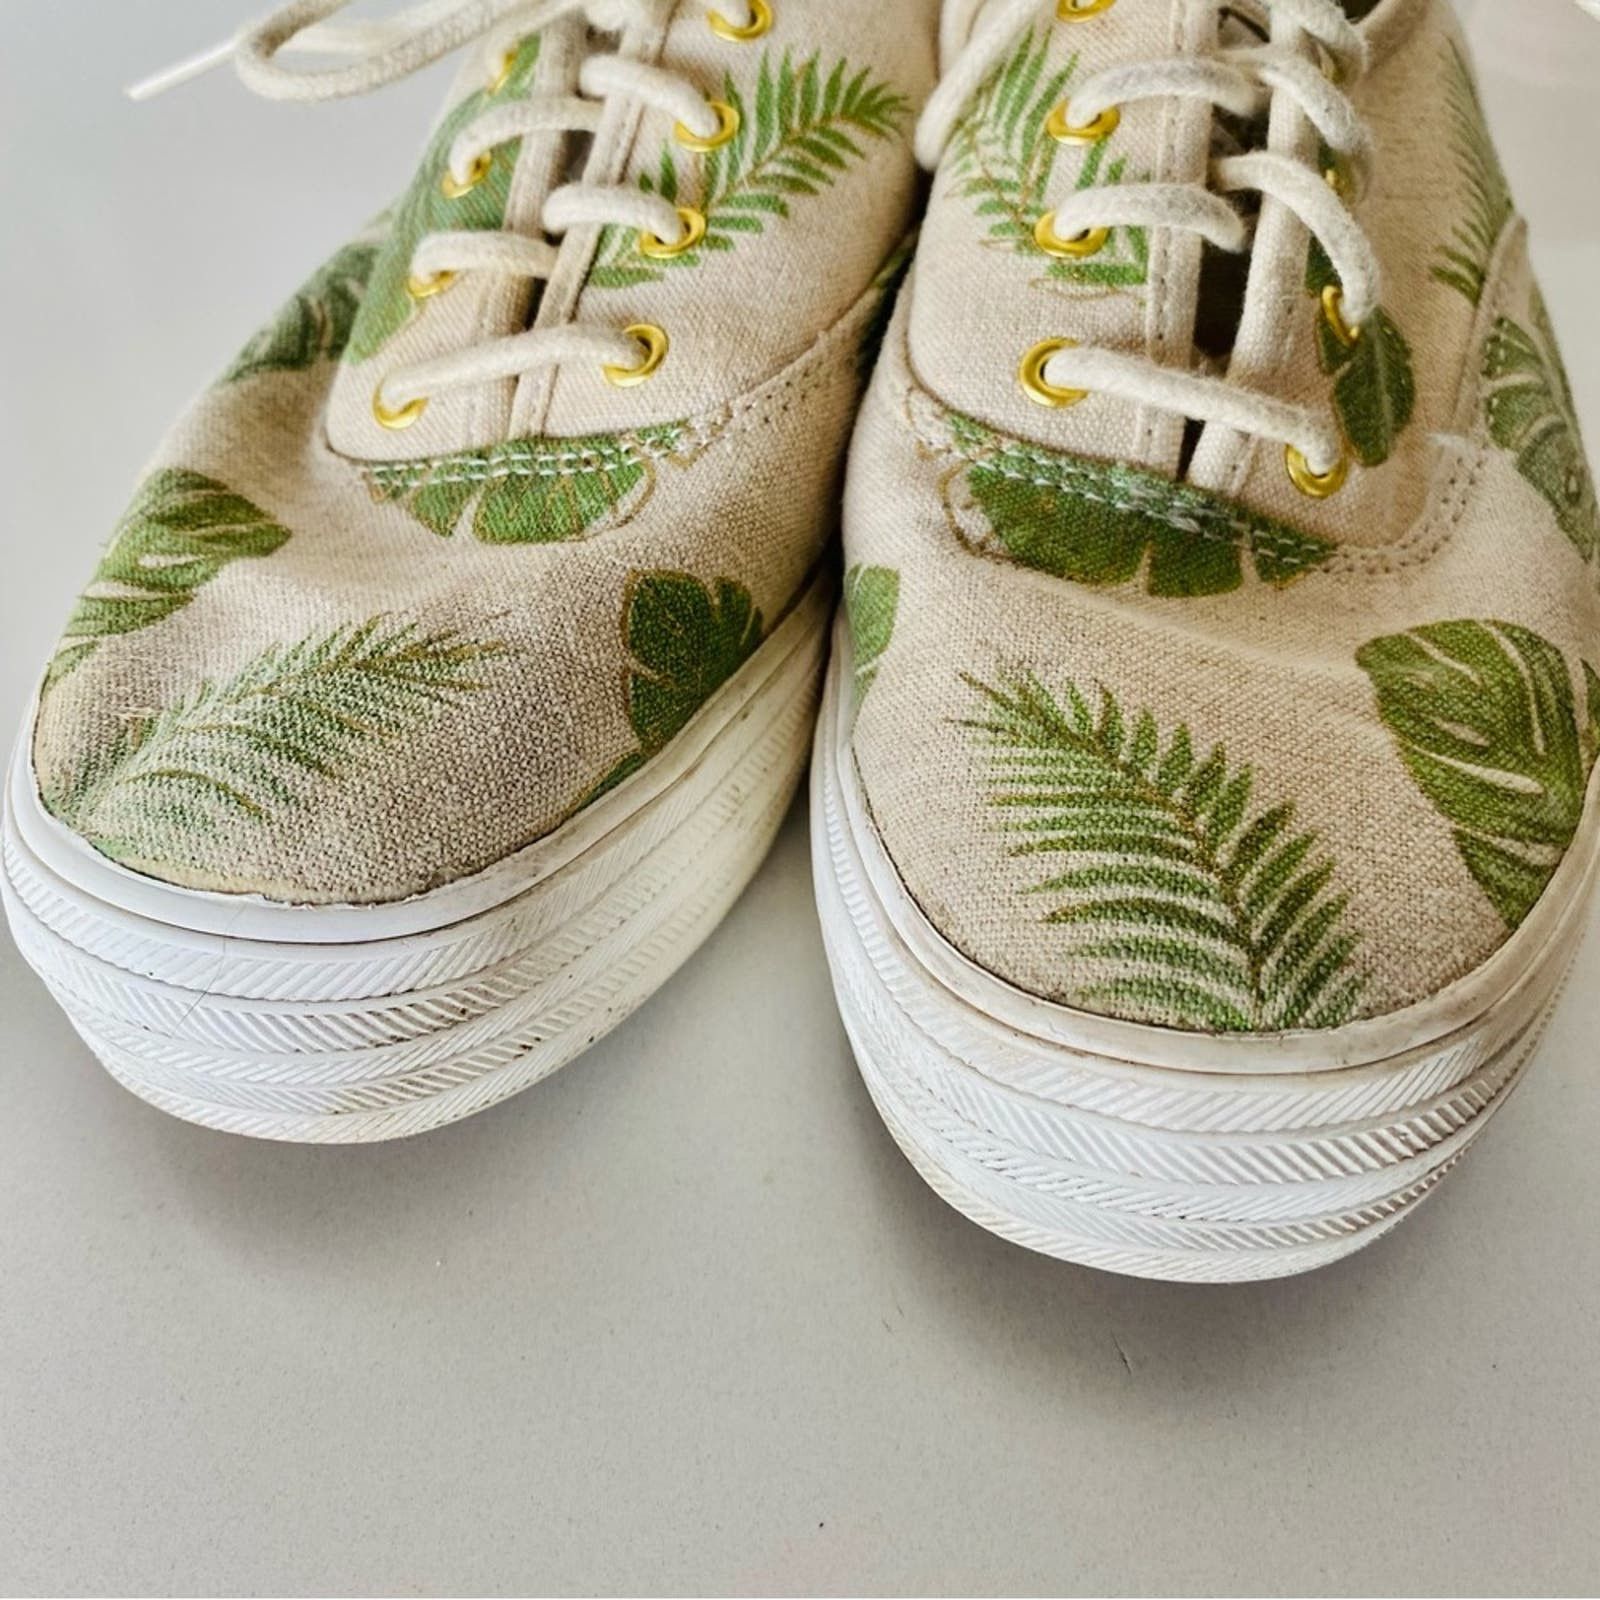 Anthropologie ANTHROPOLOGIE KEDS Cream Green Palm Leaf Platform Sneakers Size US 8.5 / IT 38.5 - 7 Thumbnail